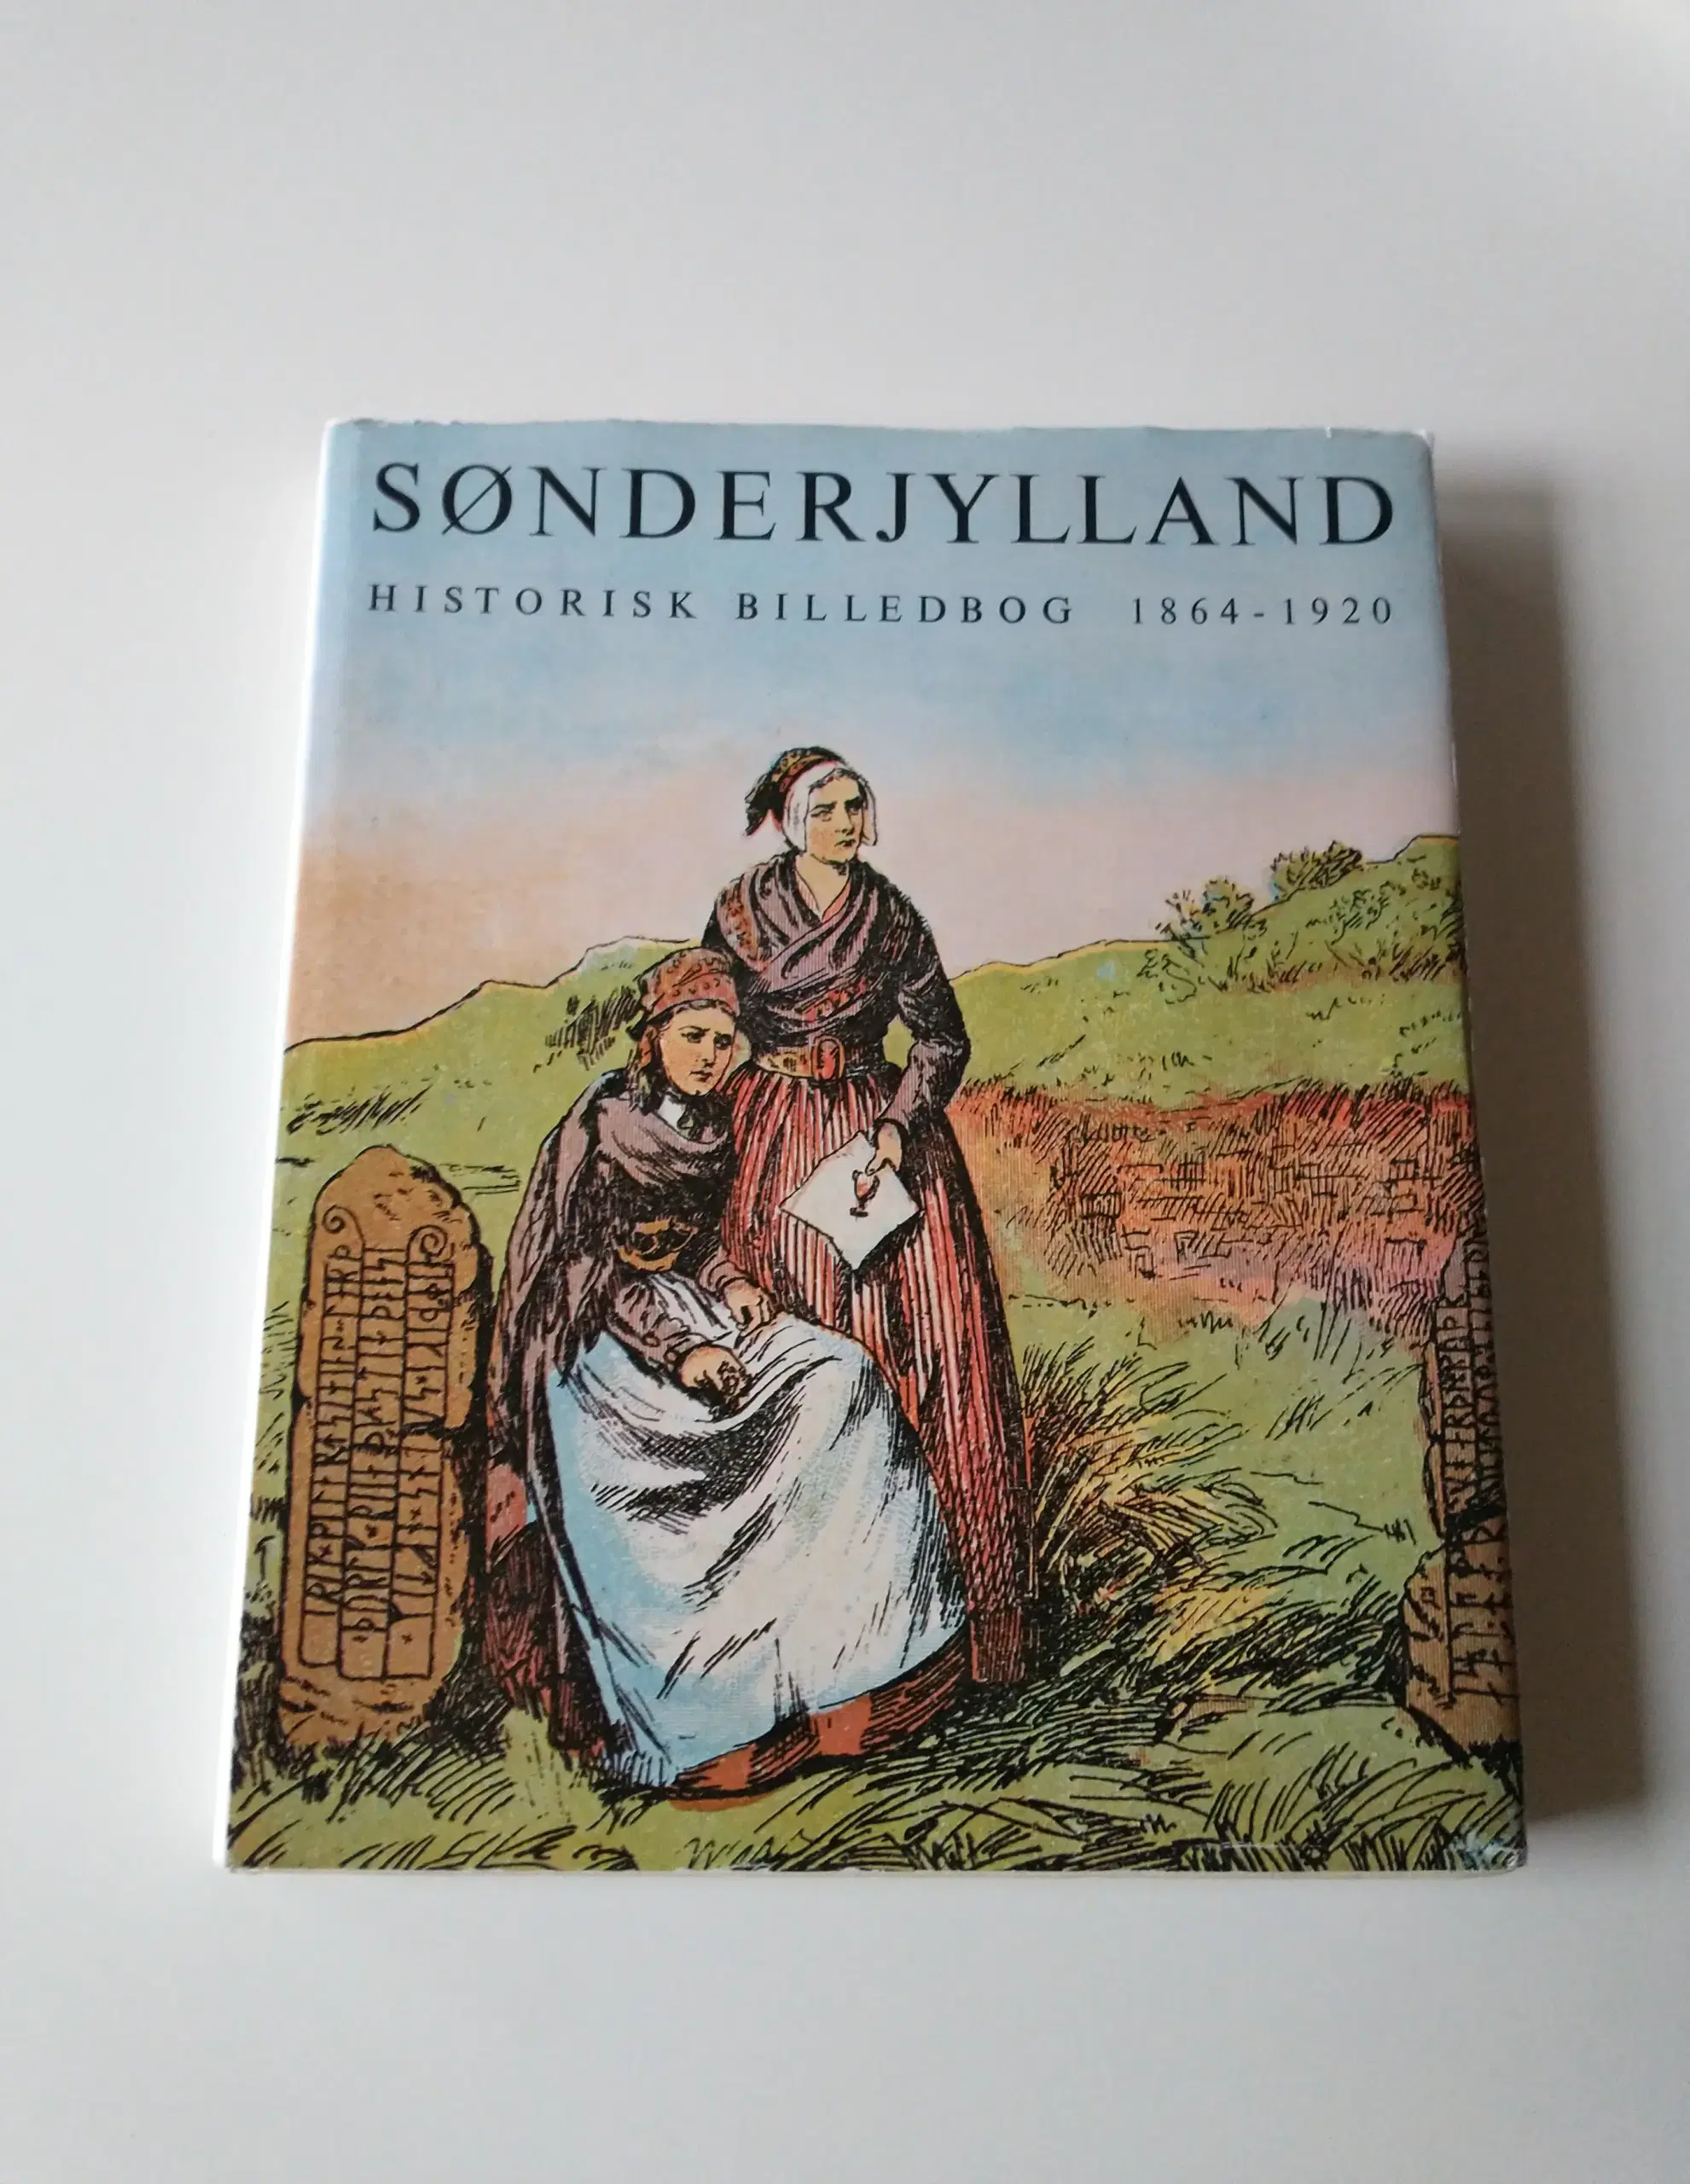 Sønderjylland - historisk billedbog 1864-1920